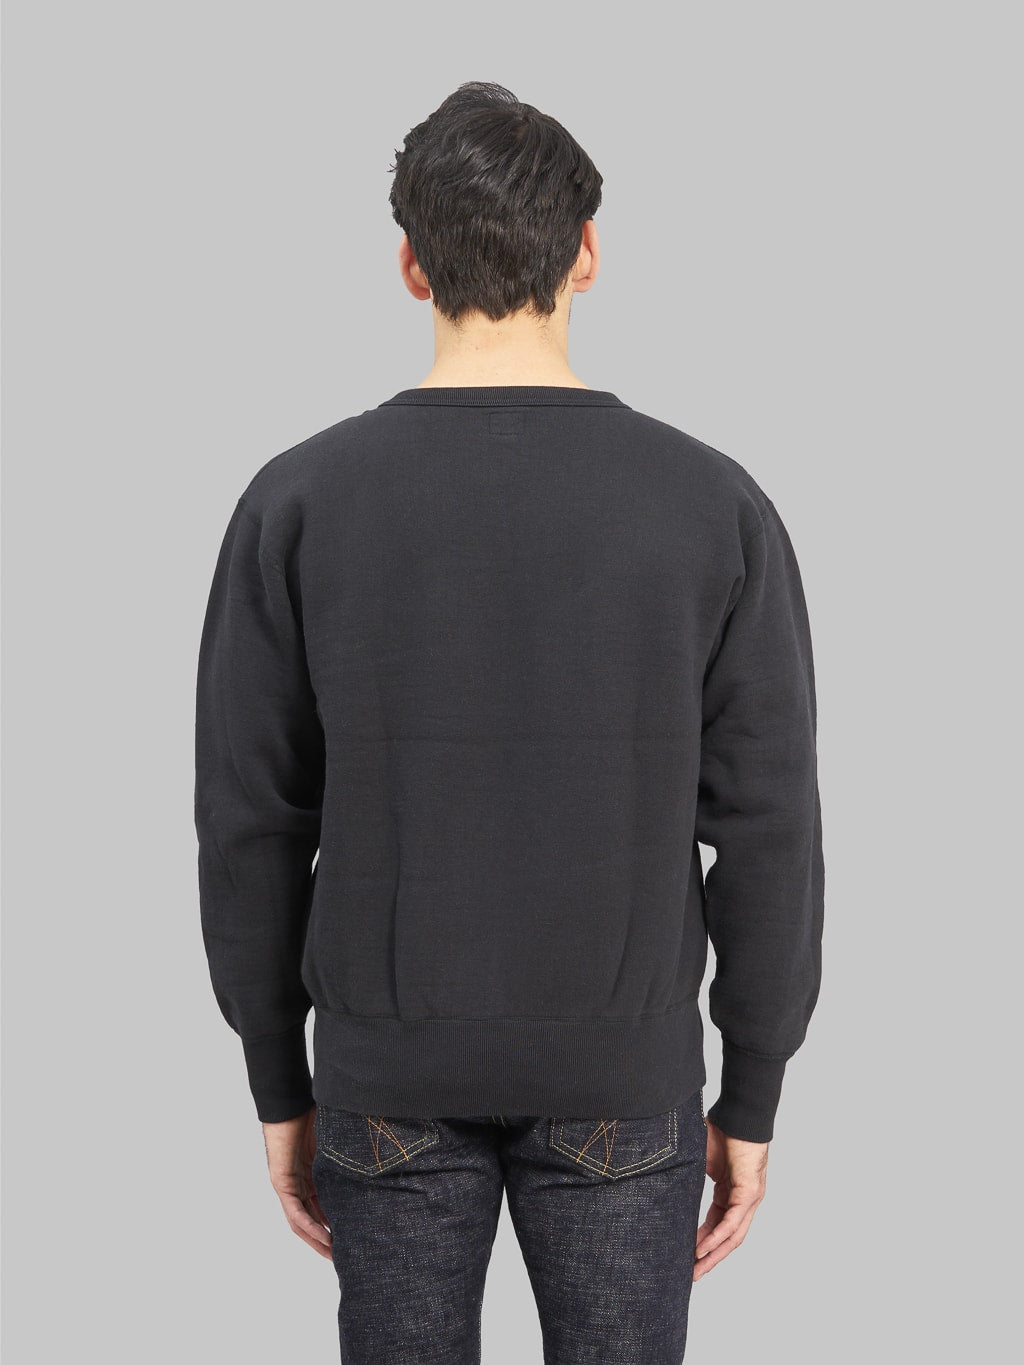 The Strike Gold Loopwheeled Sweatshirt black model back fit